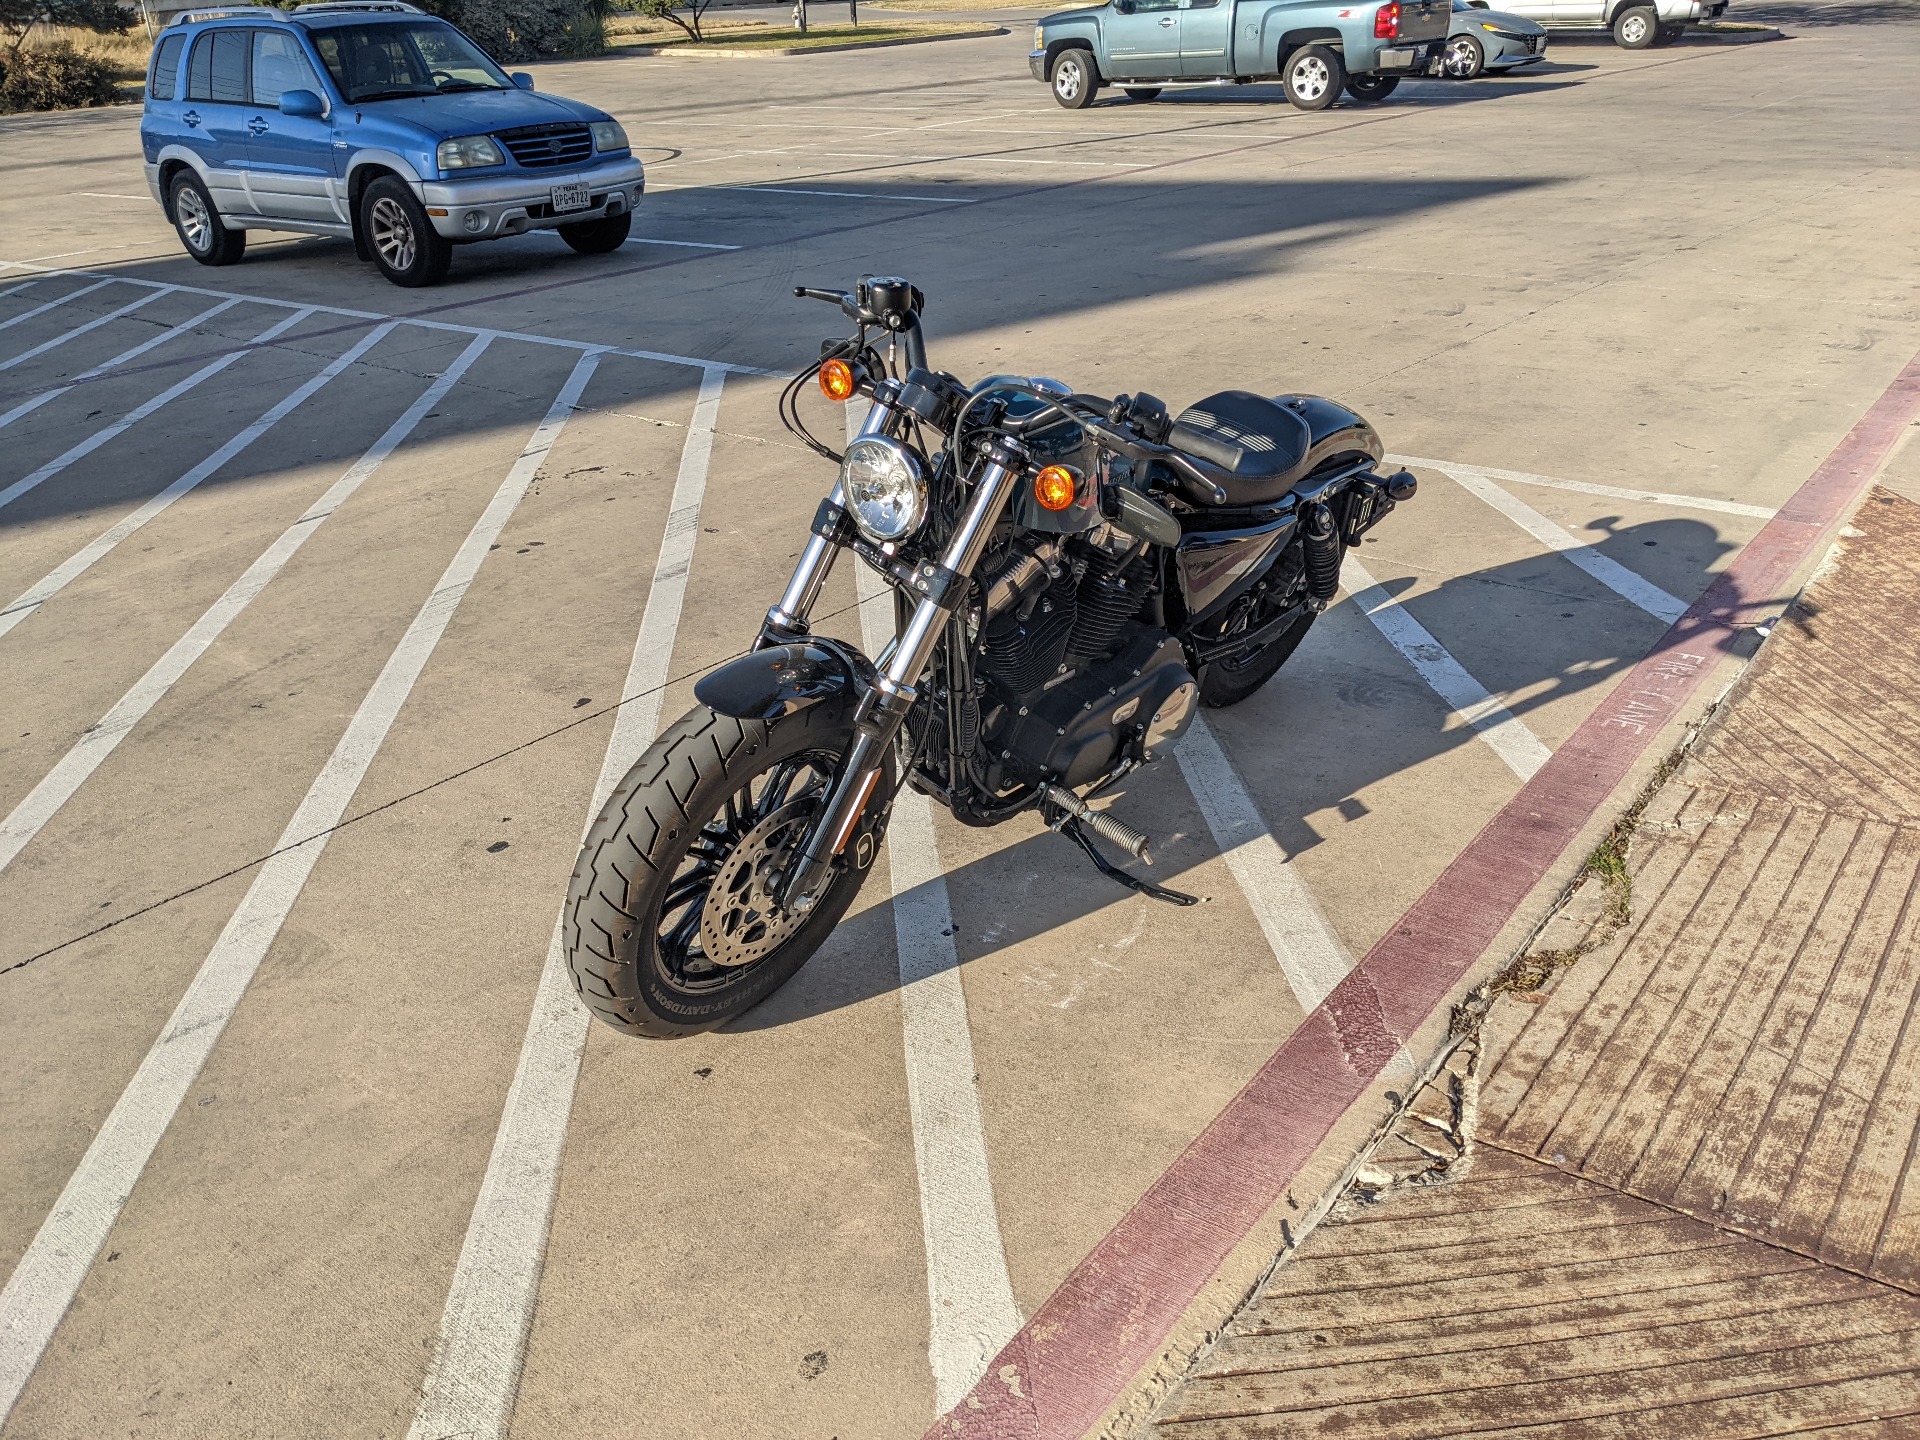 2021 Harley-Davidson Forty-Eight® in San Antonio, Texas - Photo 4